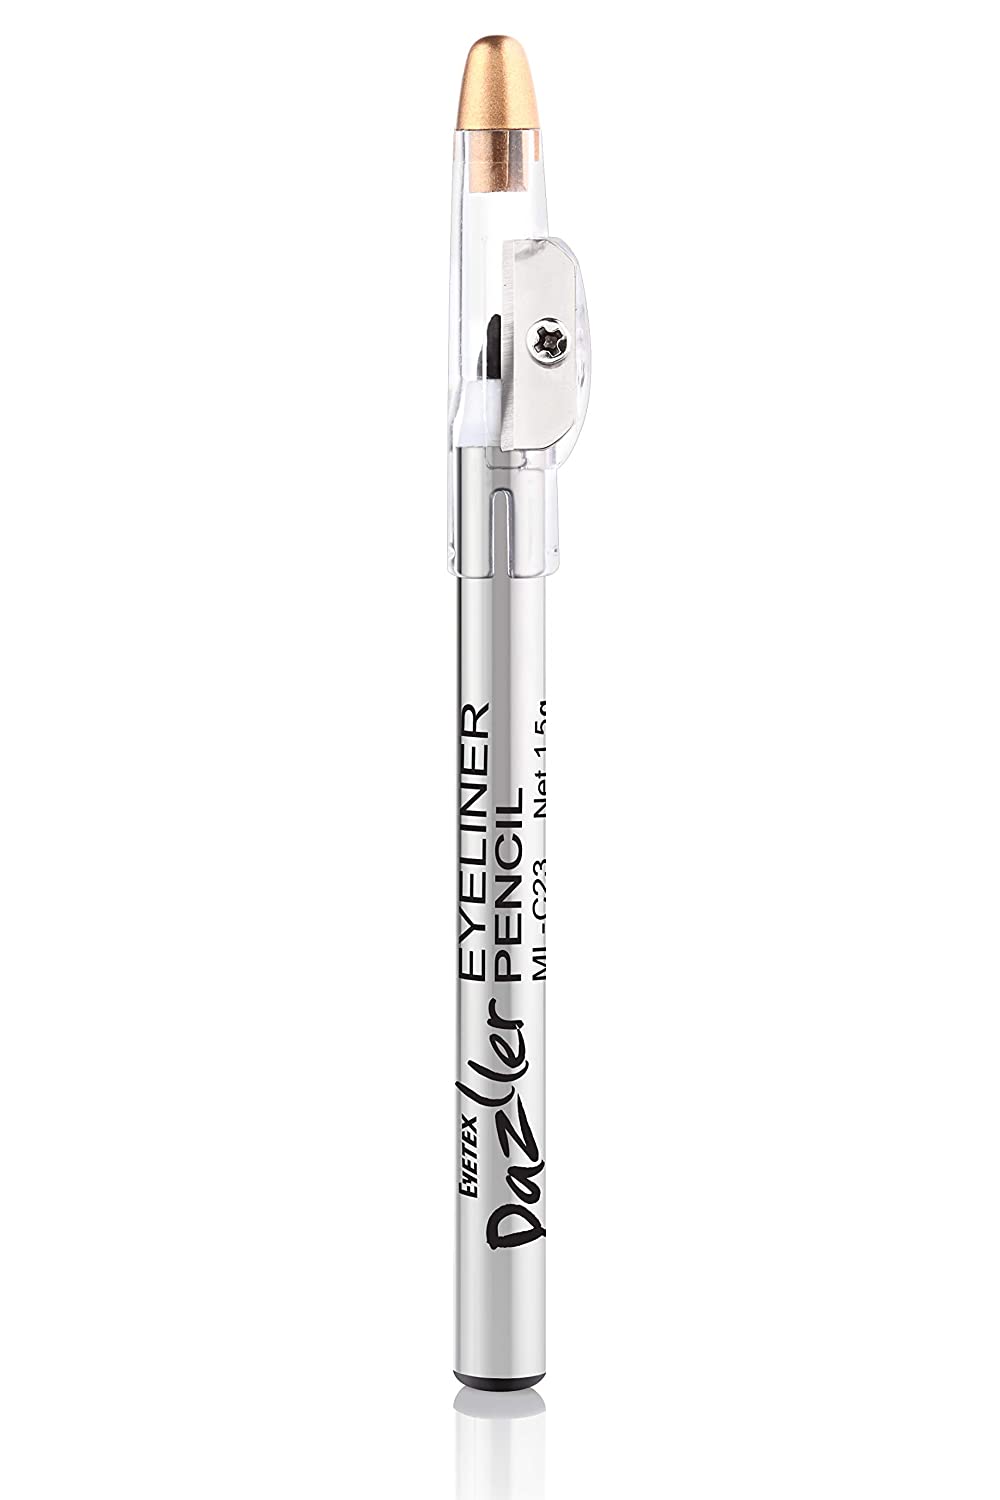 Eyetex Dazller Eyeliner Pencil (with built-in sharpener), 1.5g